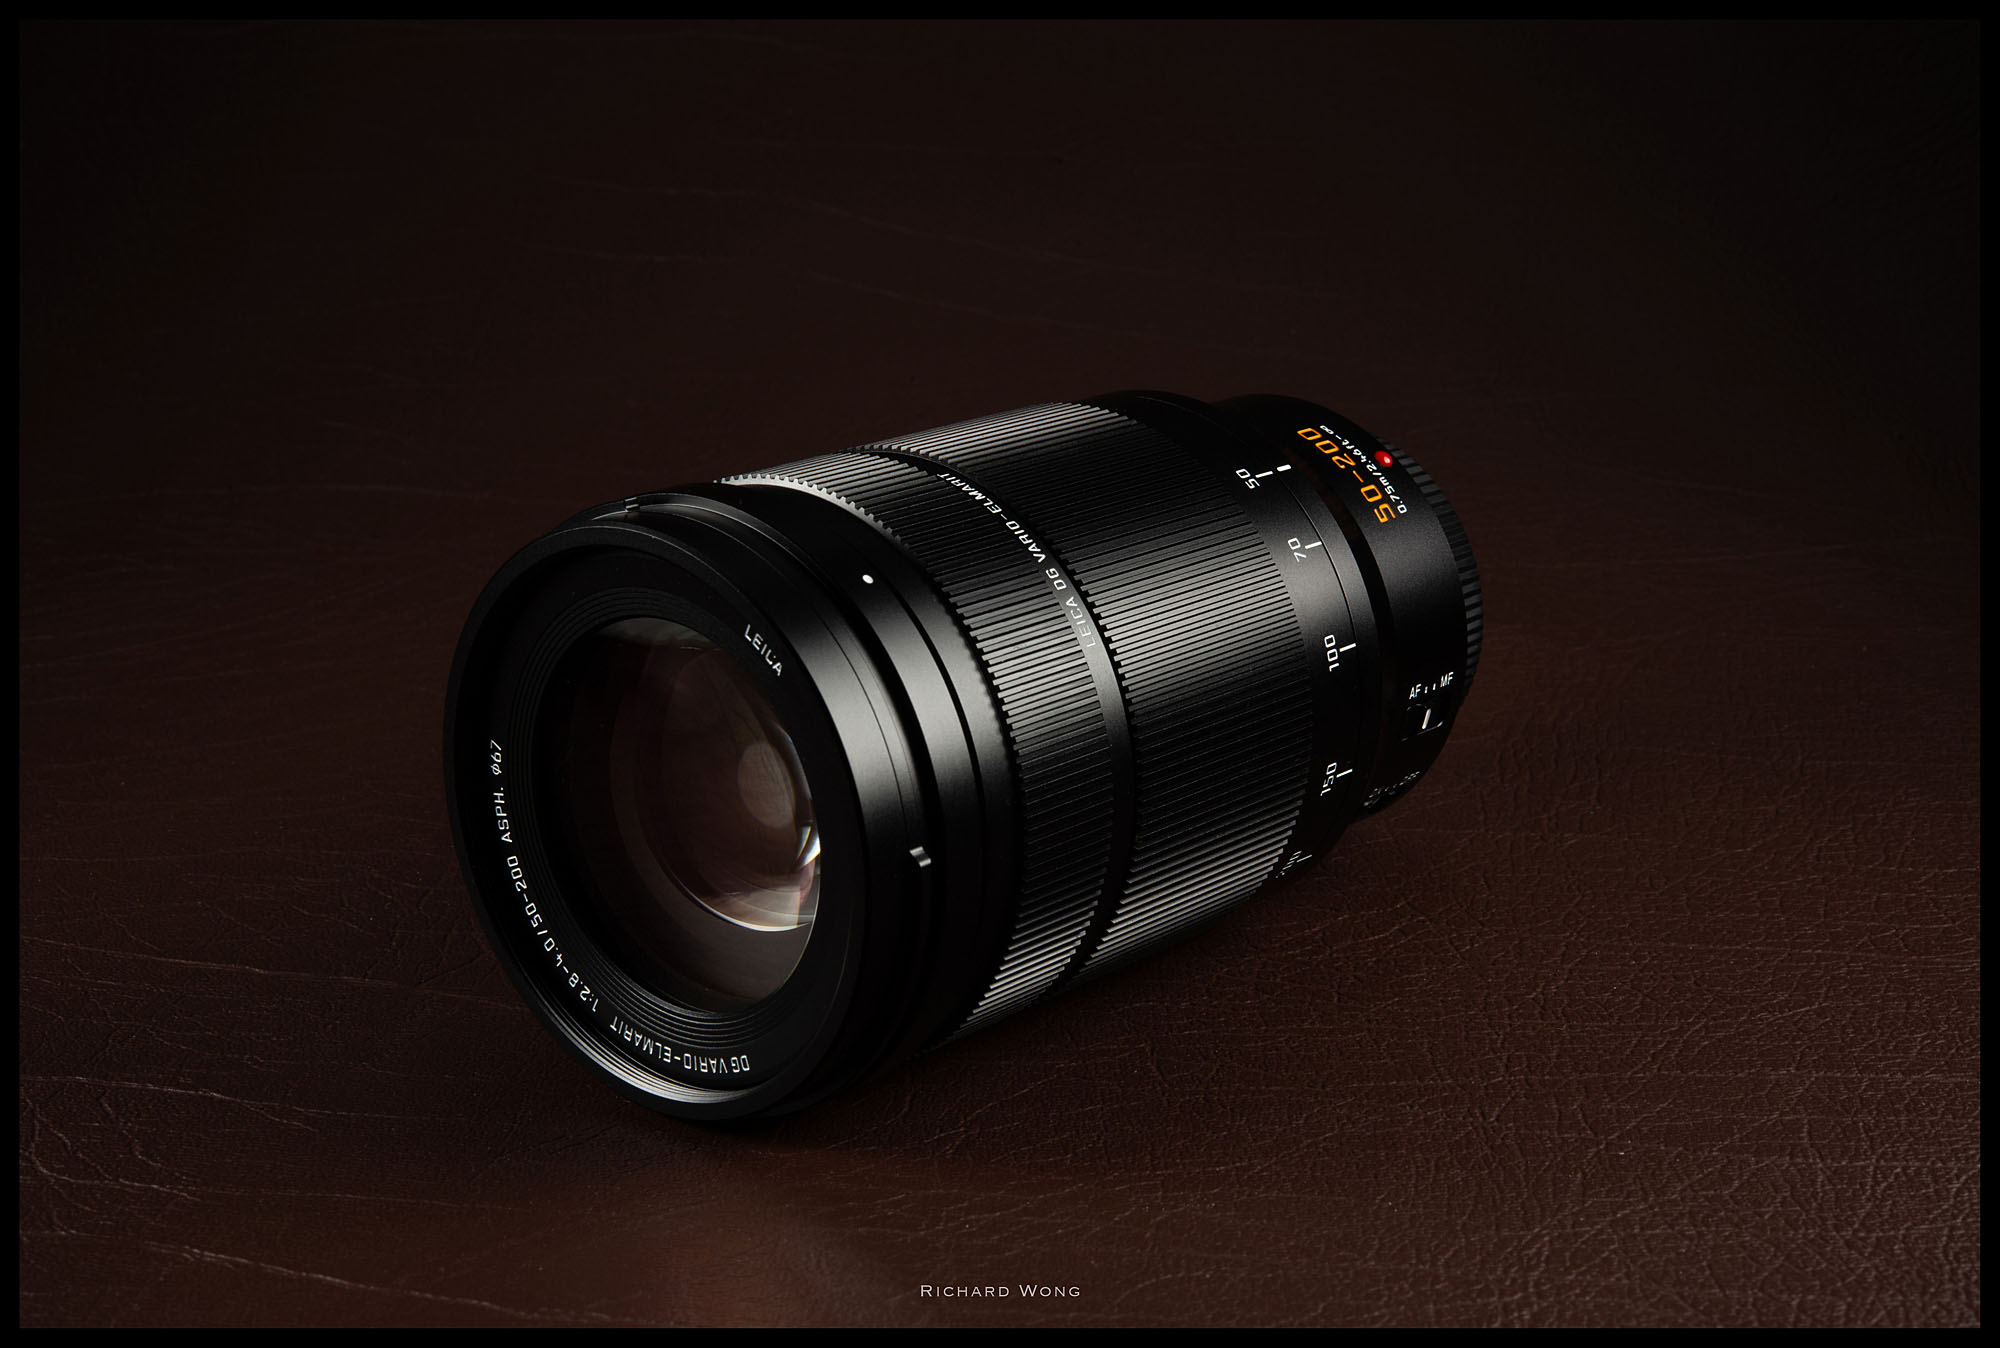 Panasonic Leica DG Vario-Elmarit 50-200mm f/2.8-4.0 ASPH lens